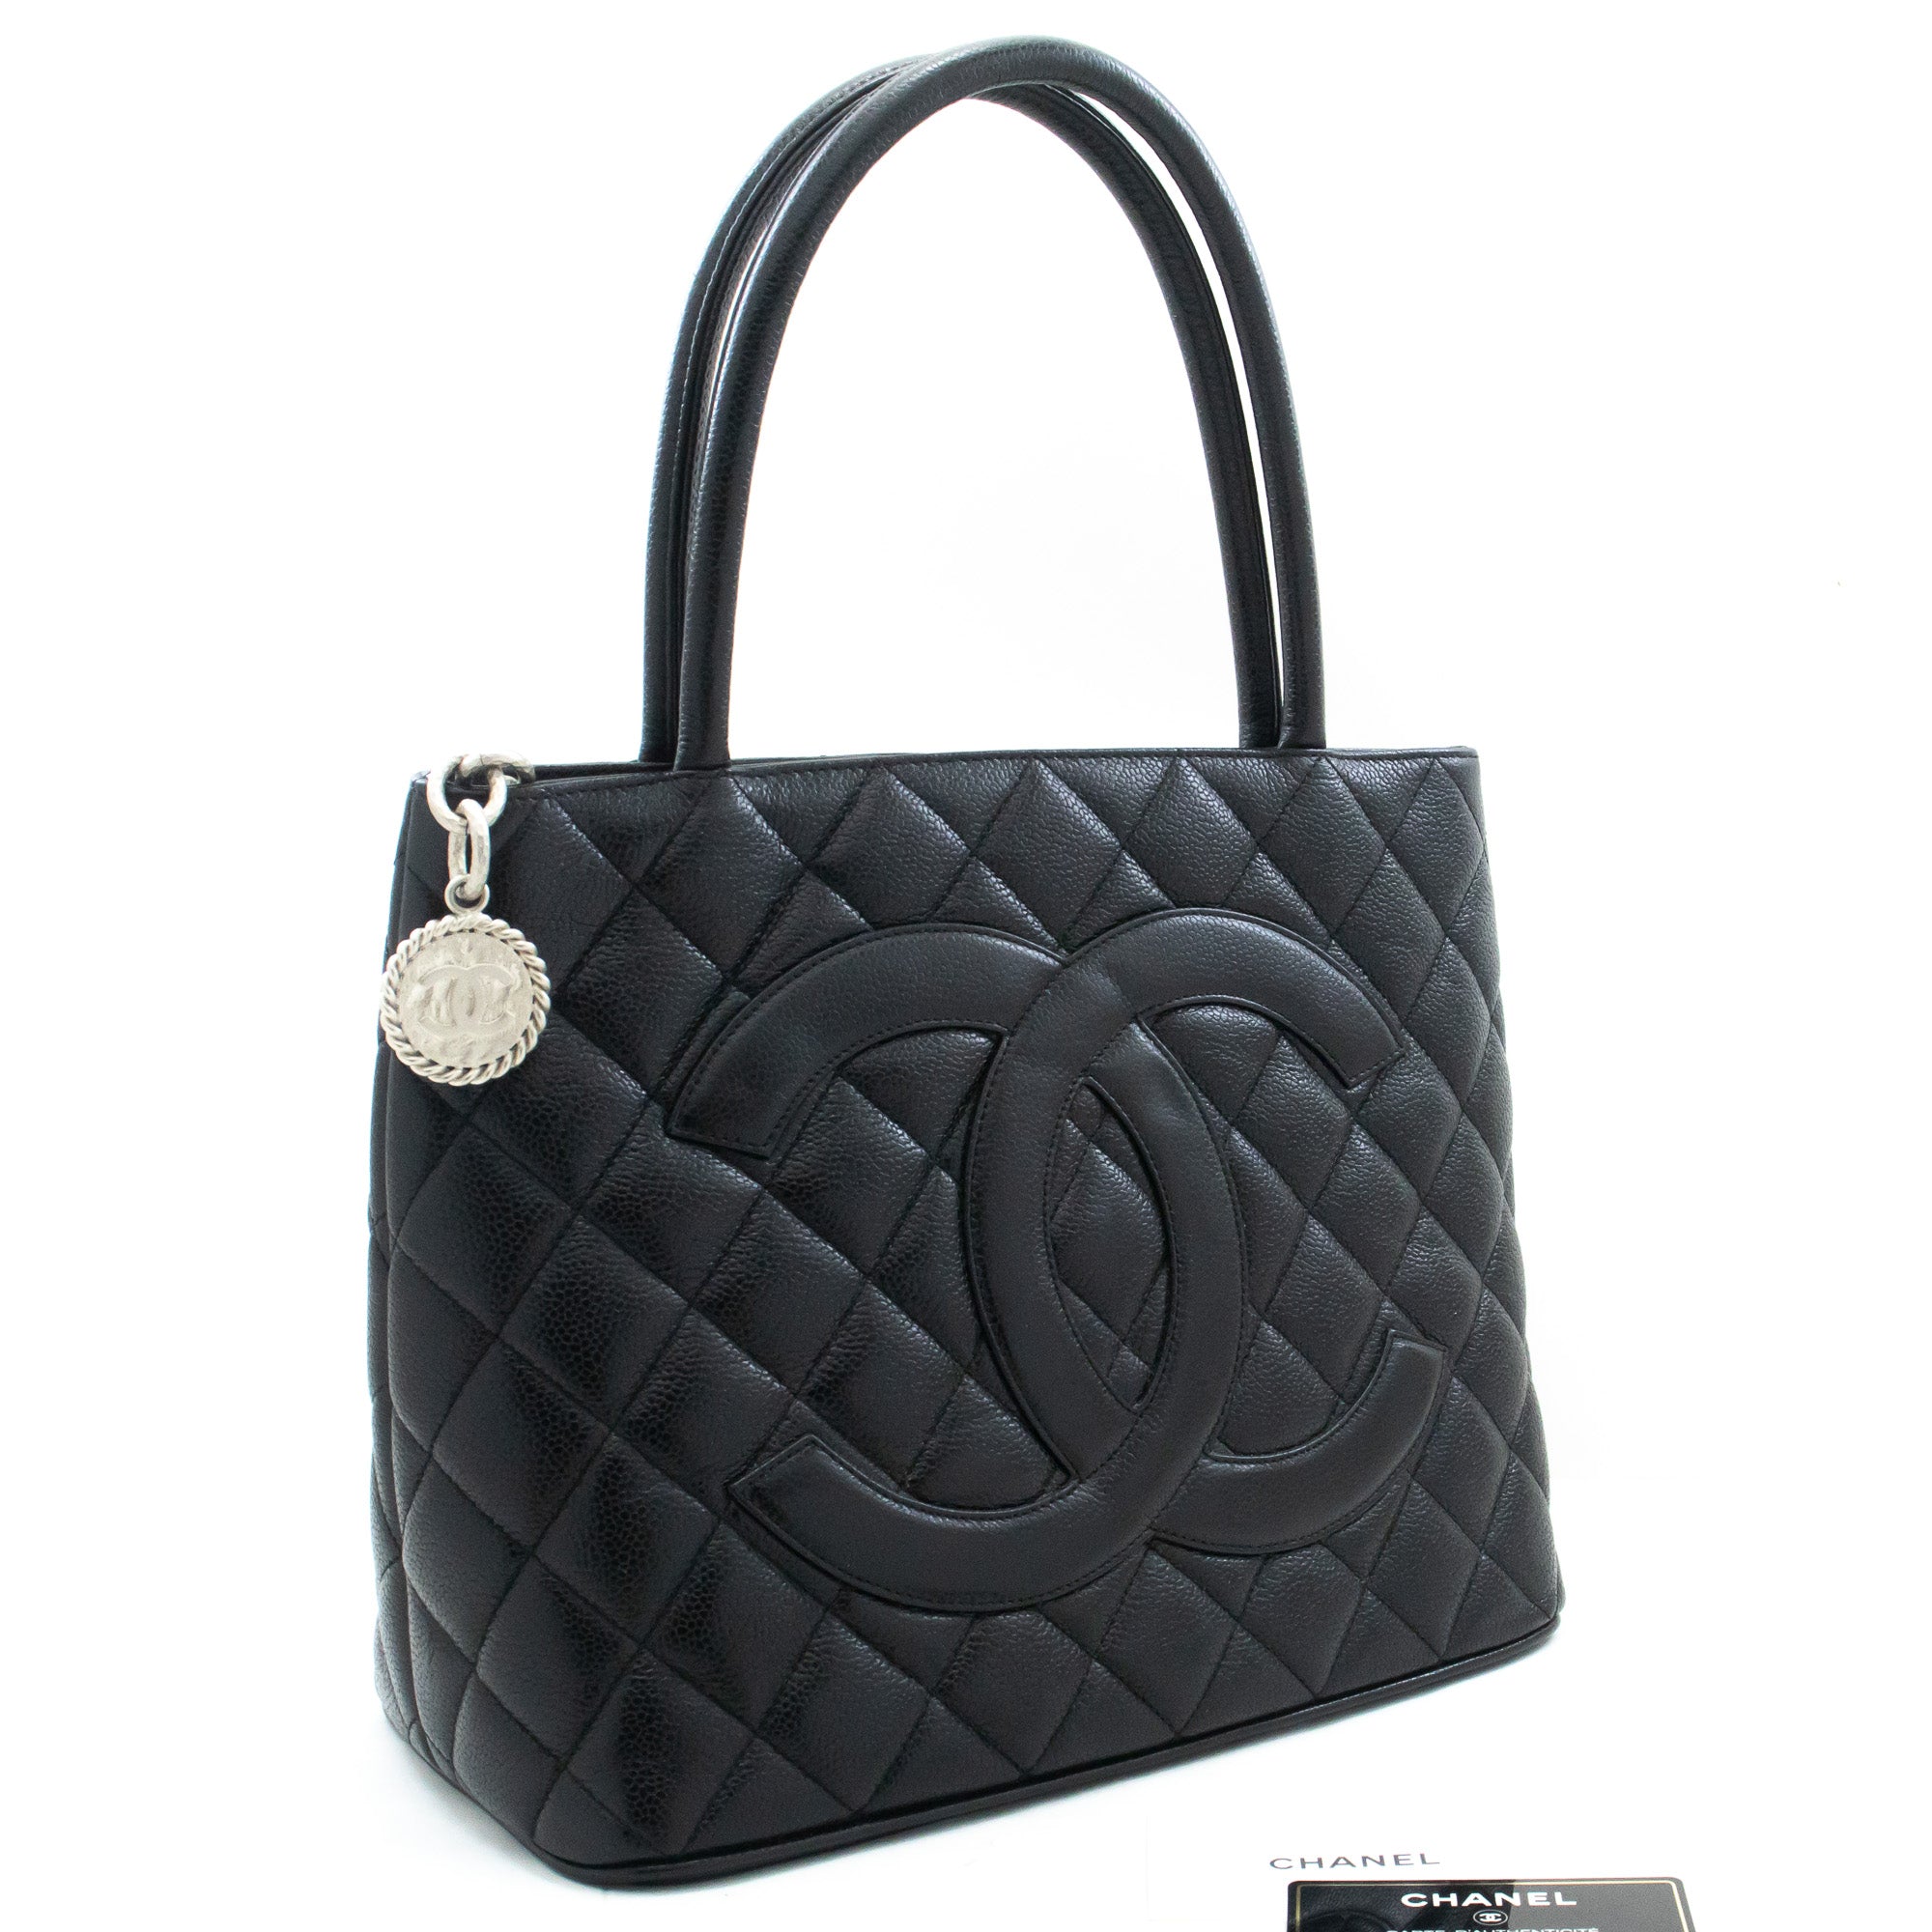 CHANEL Silver Medallion Caviar Shoulder Bag Grand Shopping Tote i74 –  hannari-shop